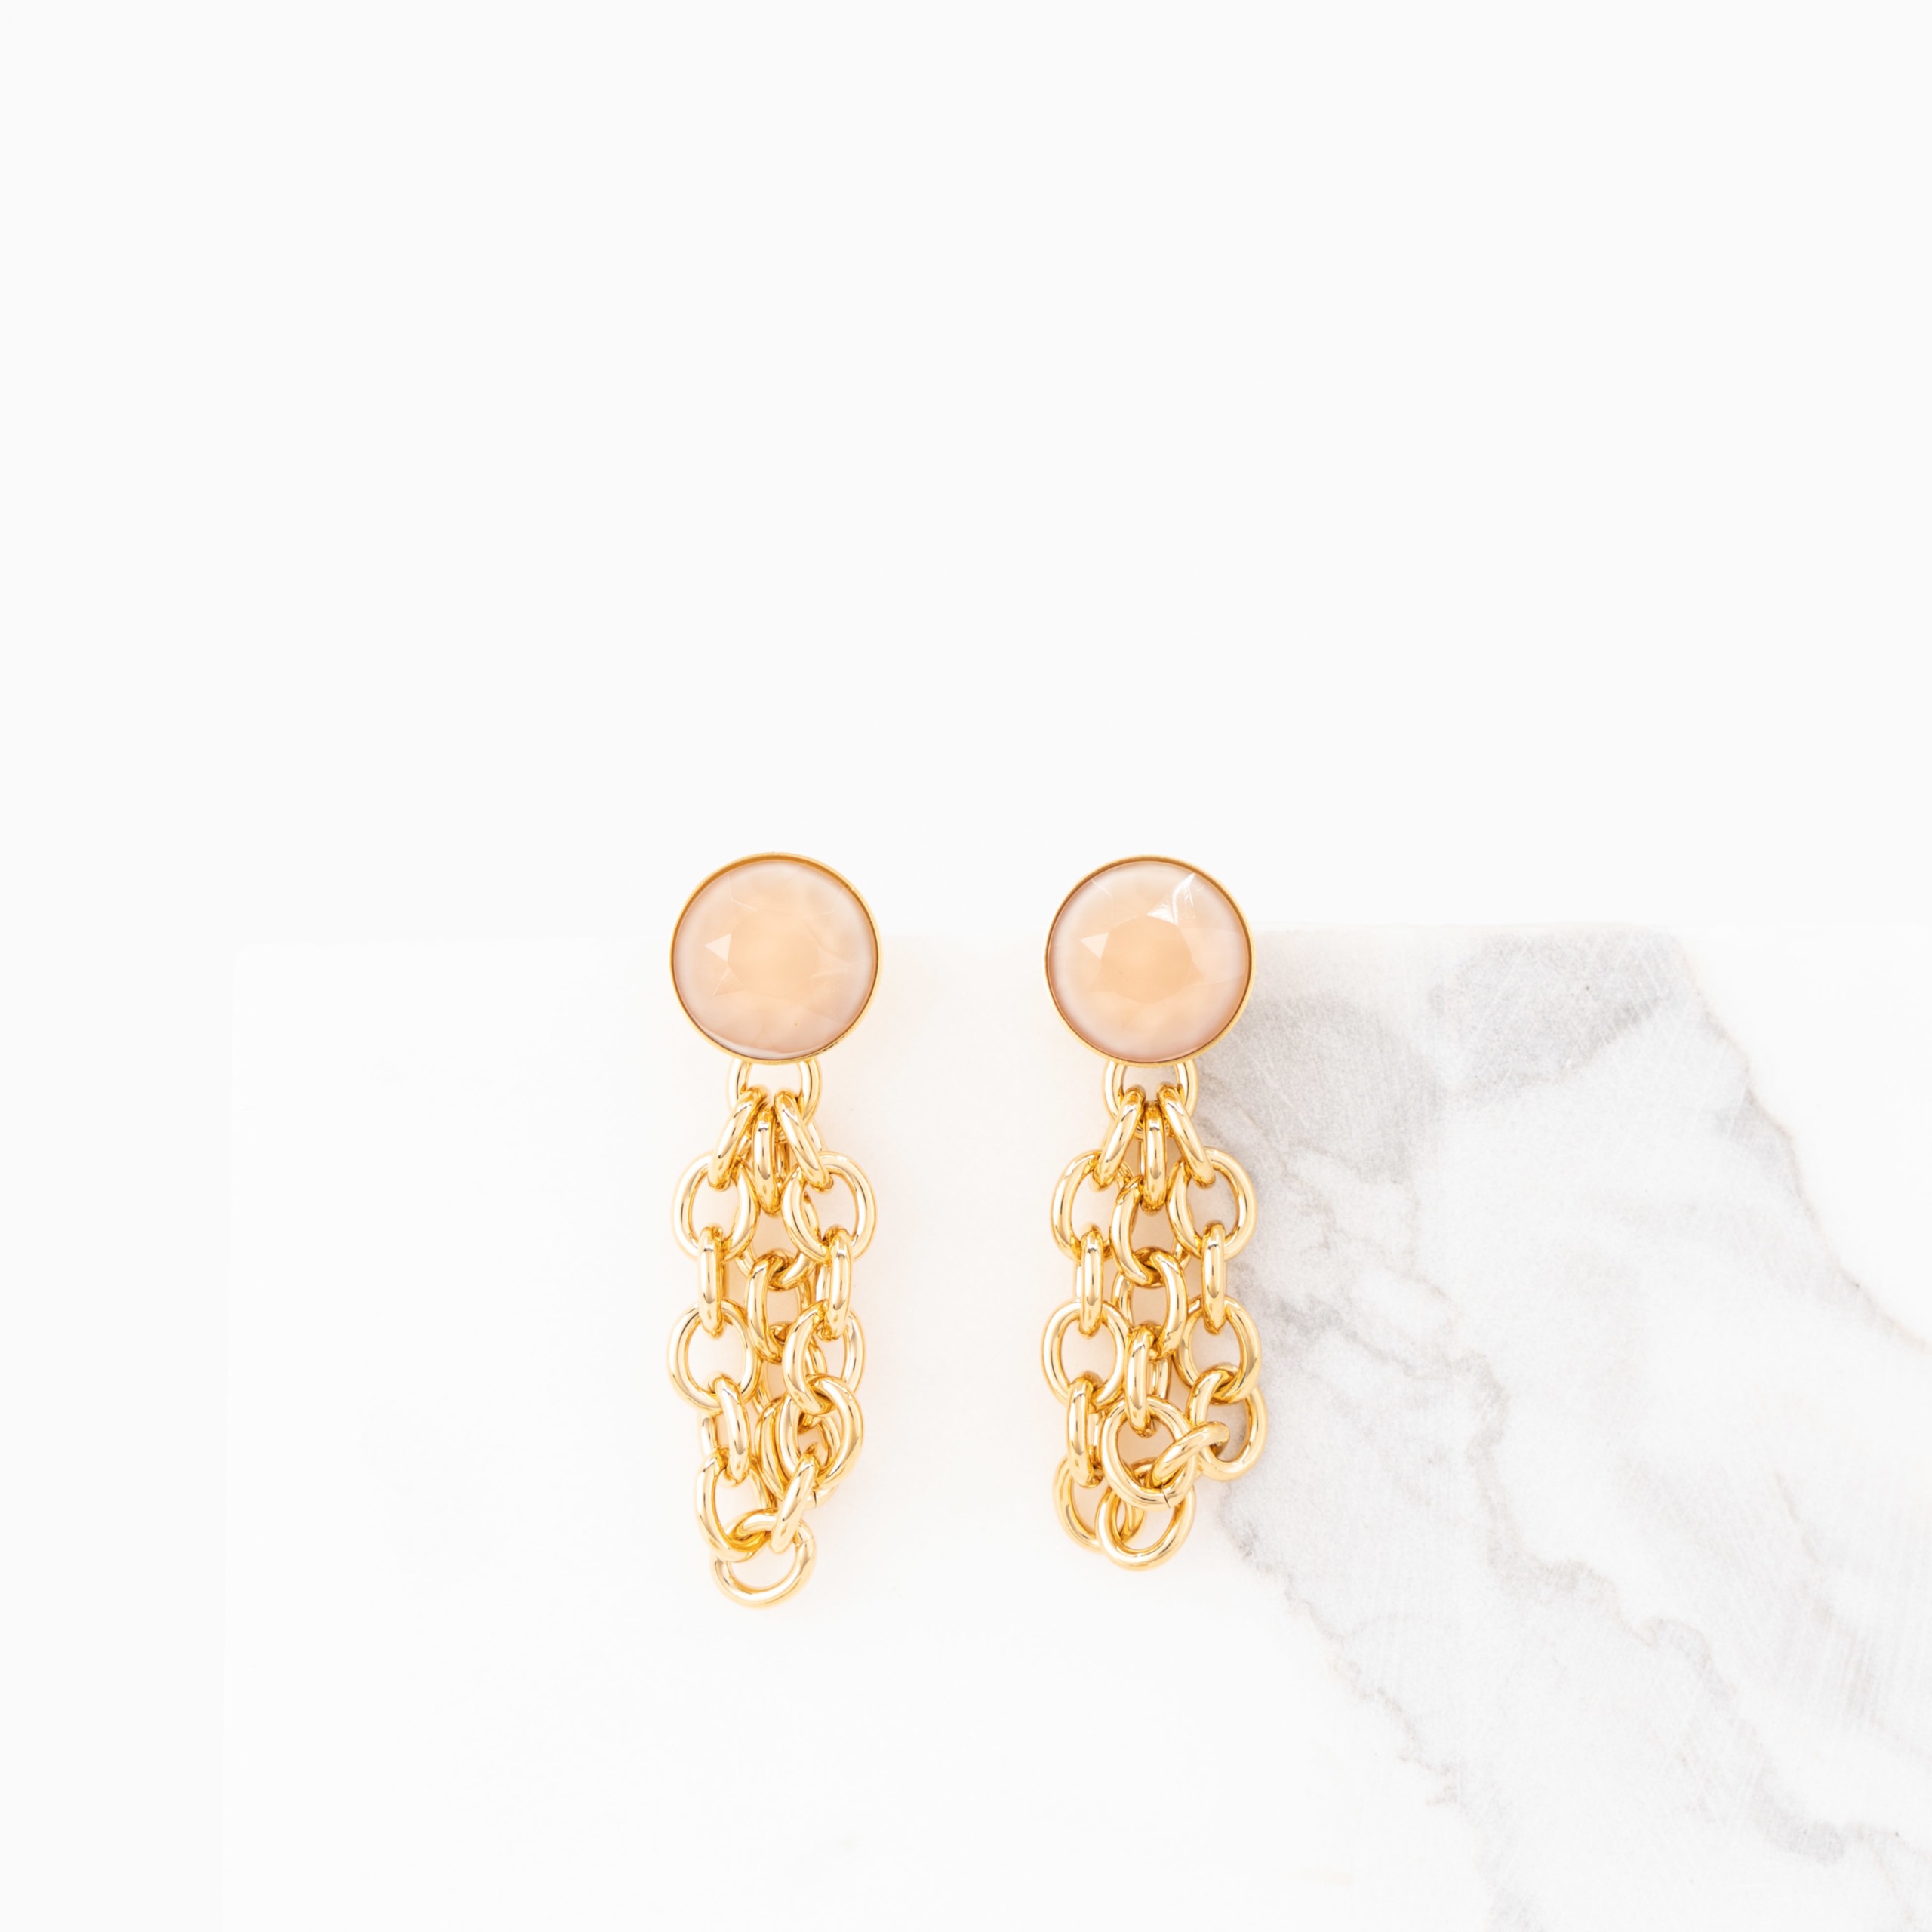 Paloma nude earrings